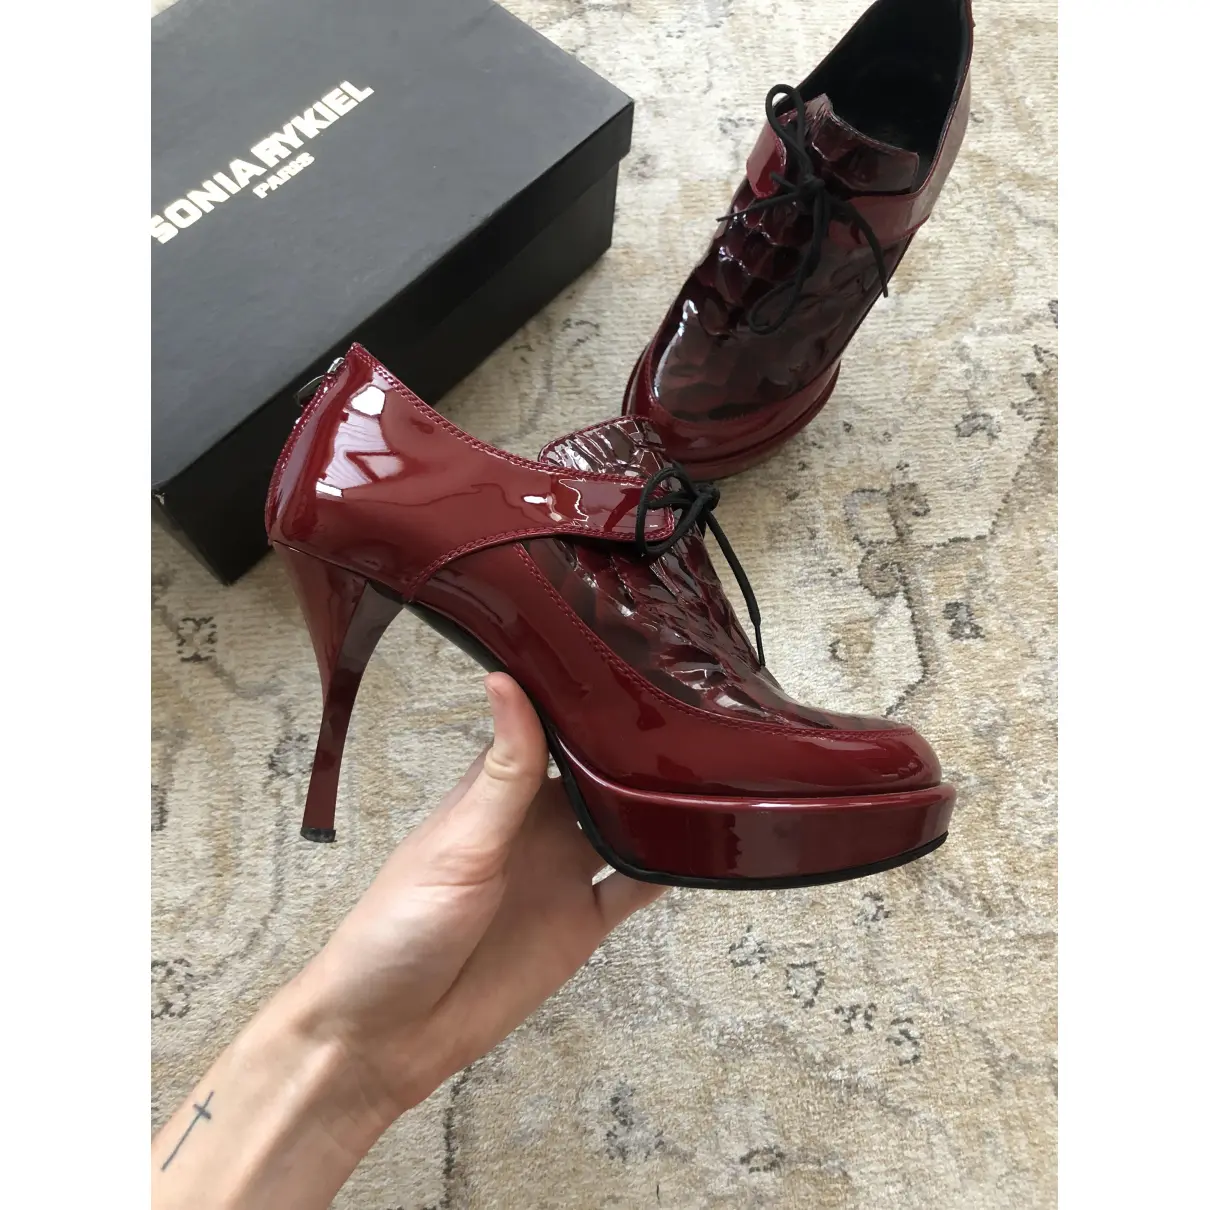 Buy Sonia Rykiel Patent leather heels online